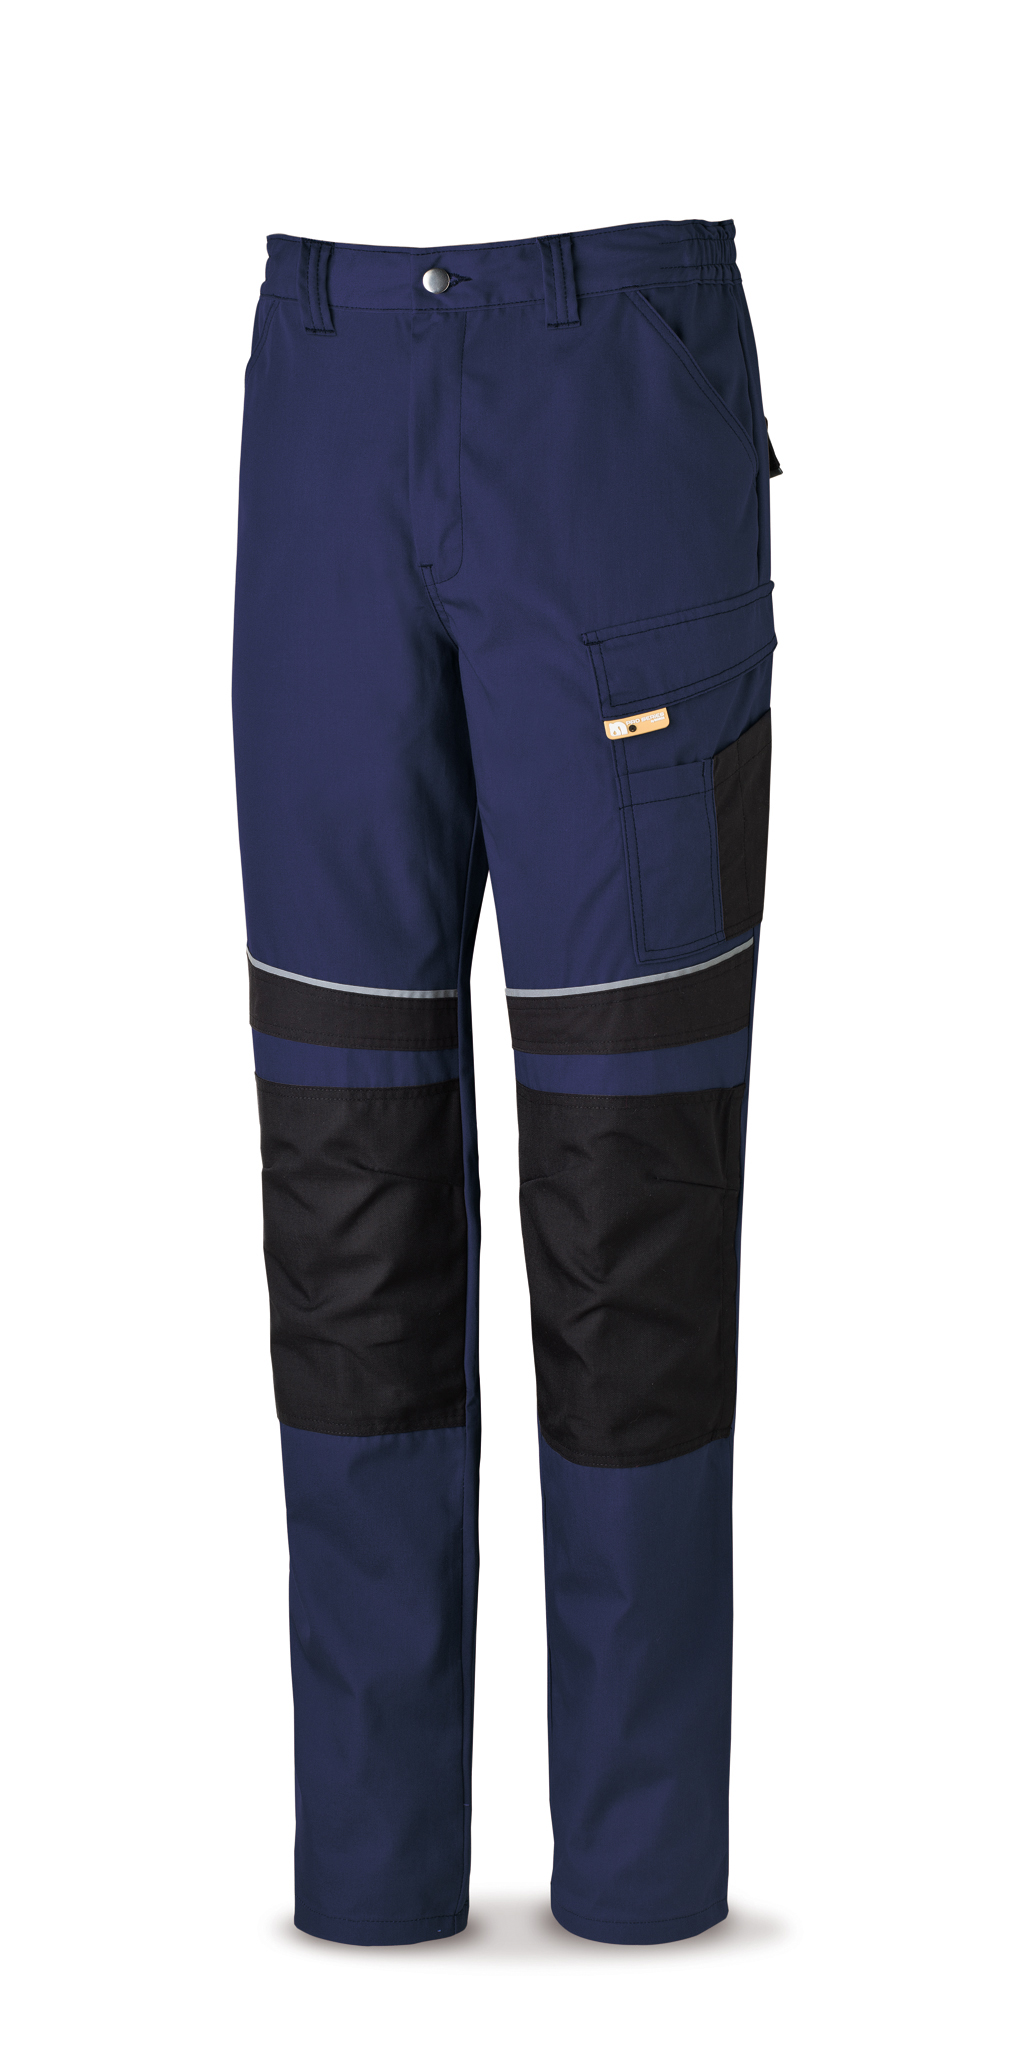 588-PANE Workwear Pro Series 245 gr. Canvas tergal trousers. Navy blue/Black. 